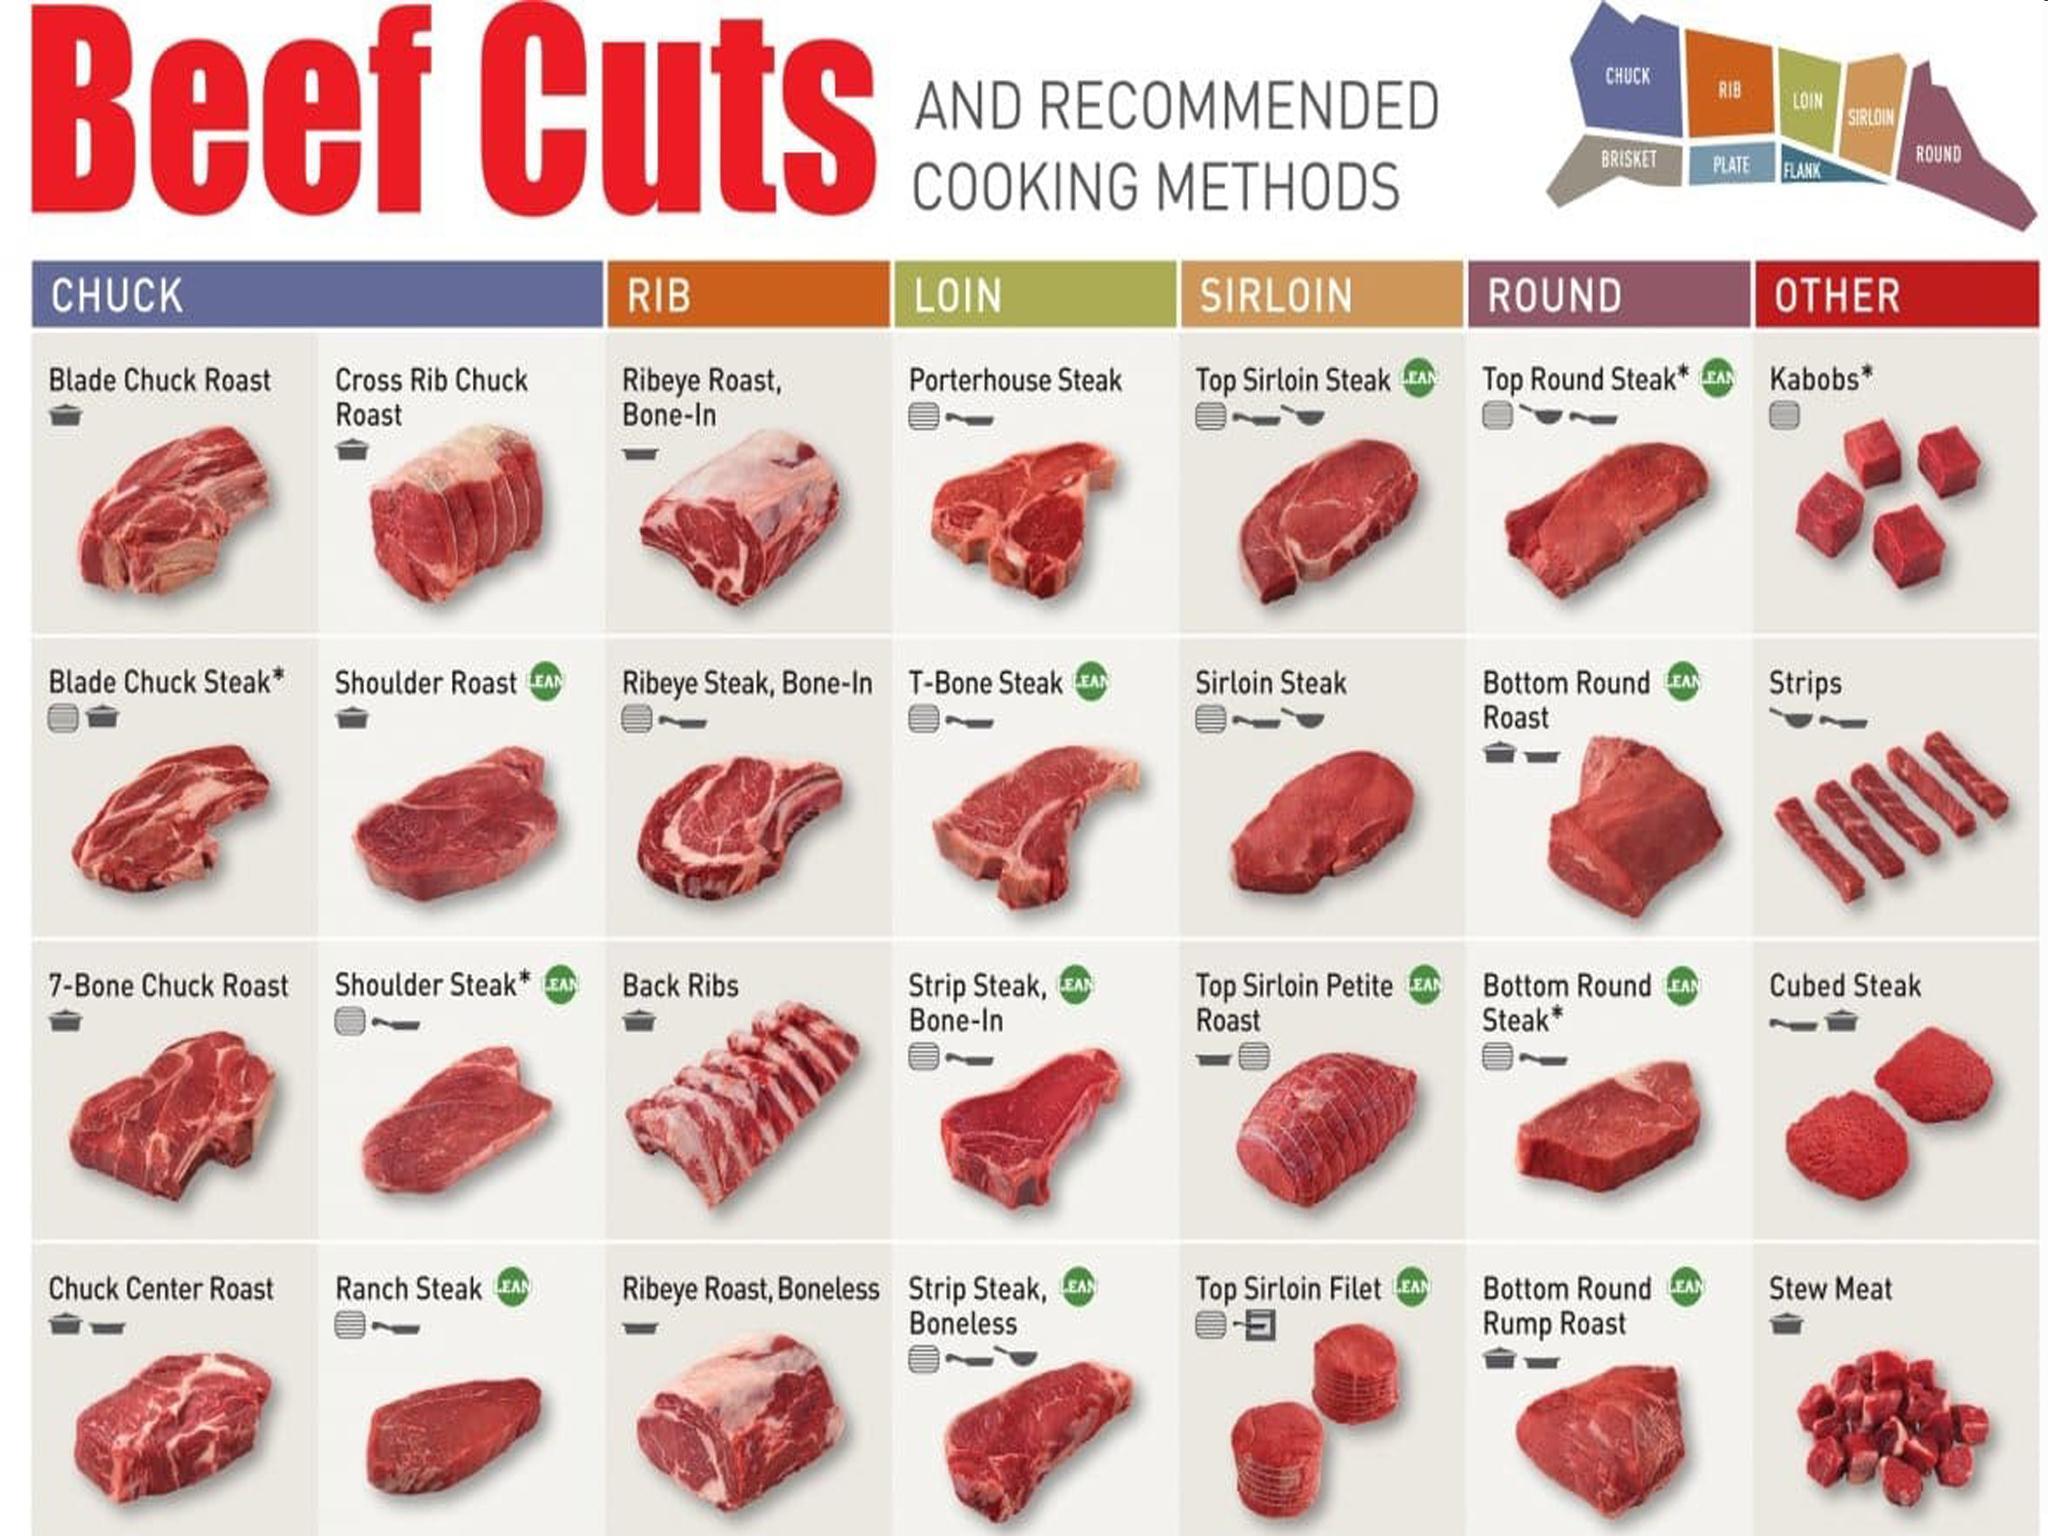 Brisket Beef Cut Chart Detikak